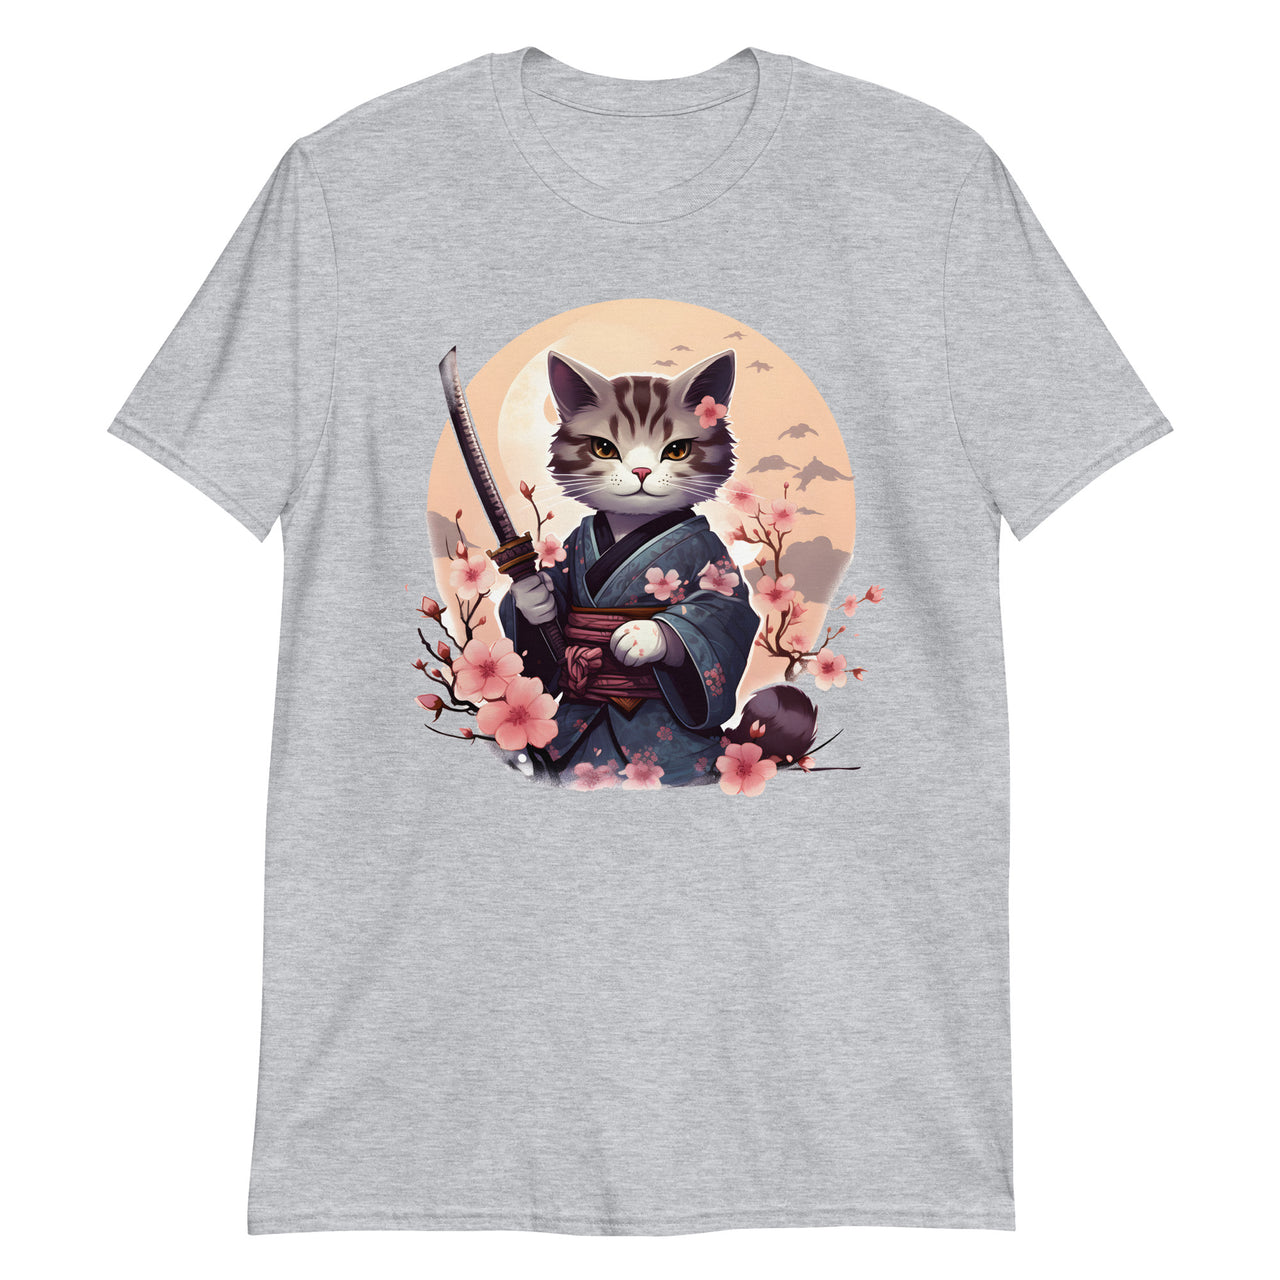 Japanese Anime Samurai Cat in Kimono T-Shirt